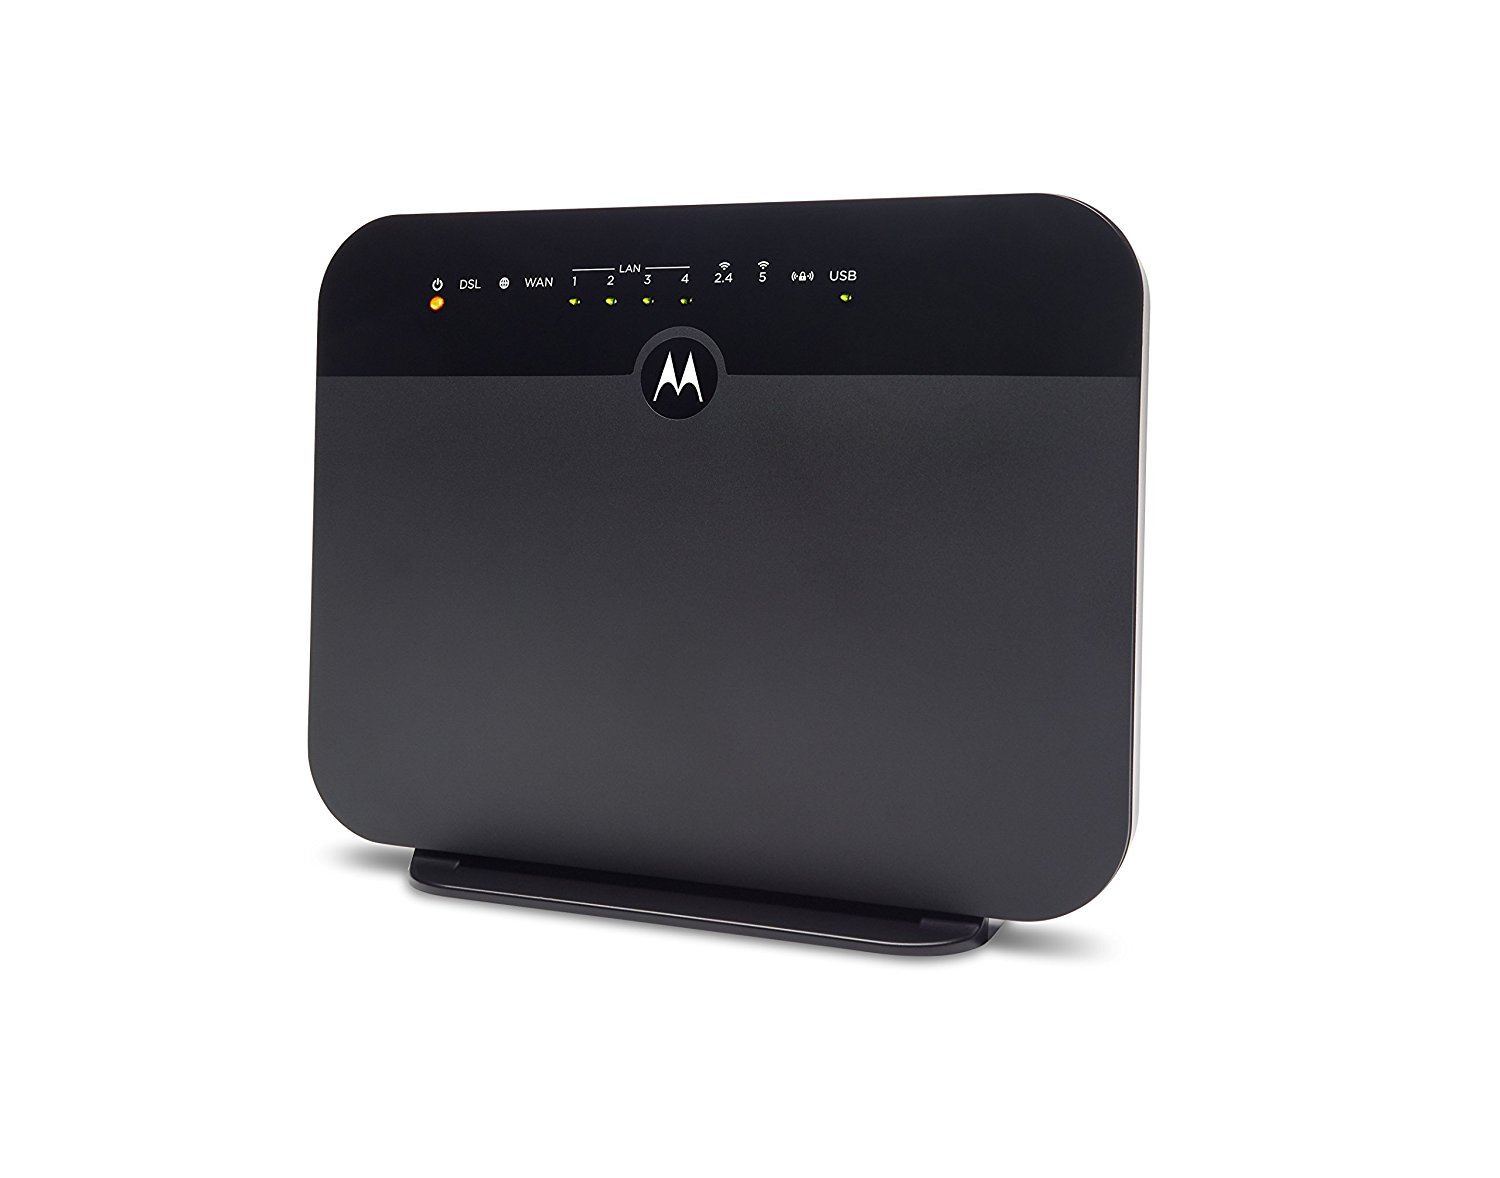 MOTOROLA VDSL2/ADSL2+ Modem + WiFi AC1600 Gigabit Router, Model MD1600, for CenturyLink, Frontier, and More